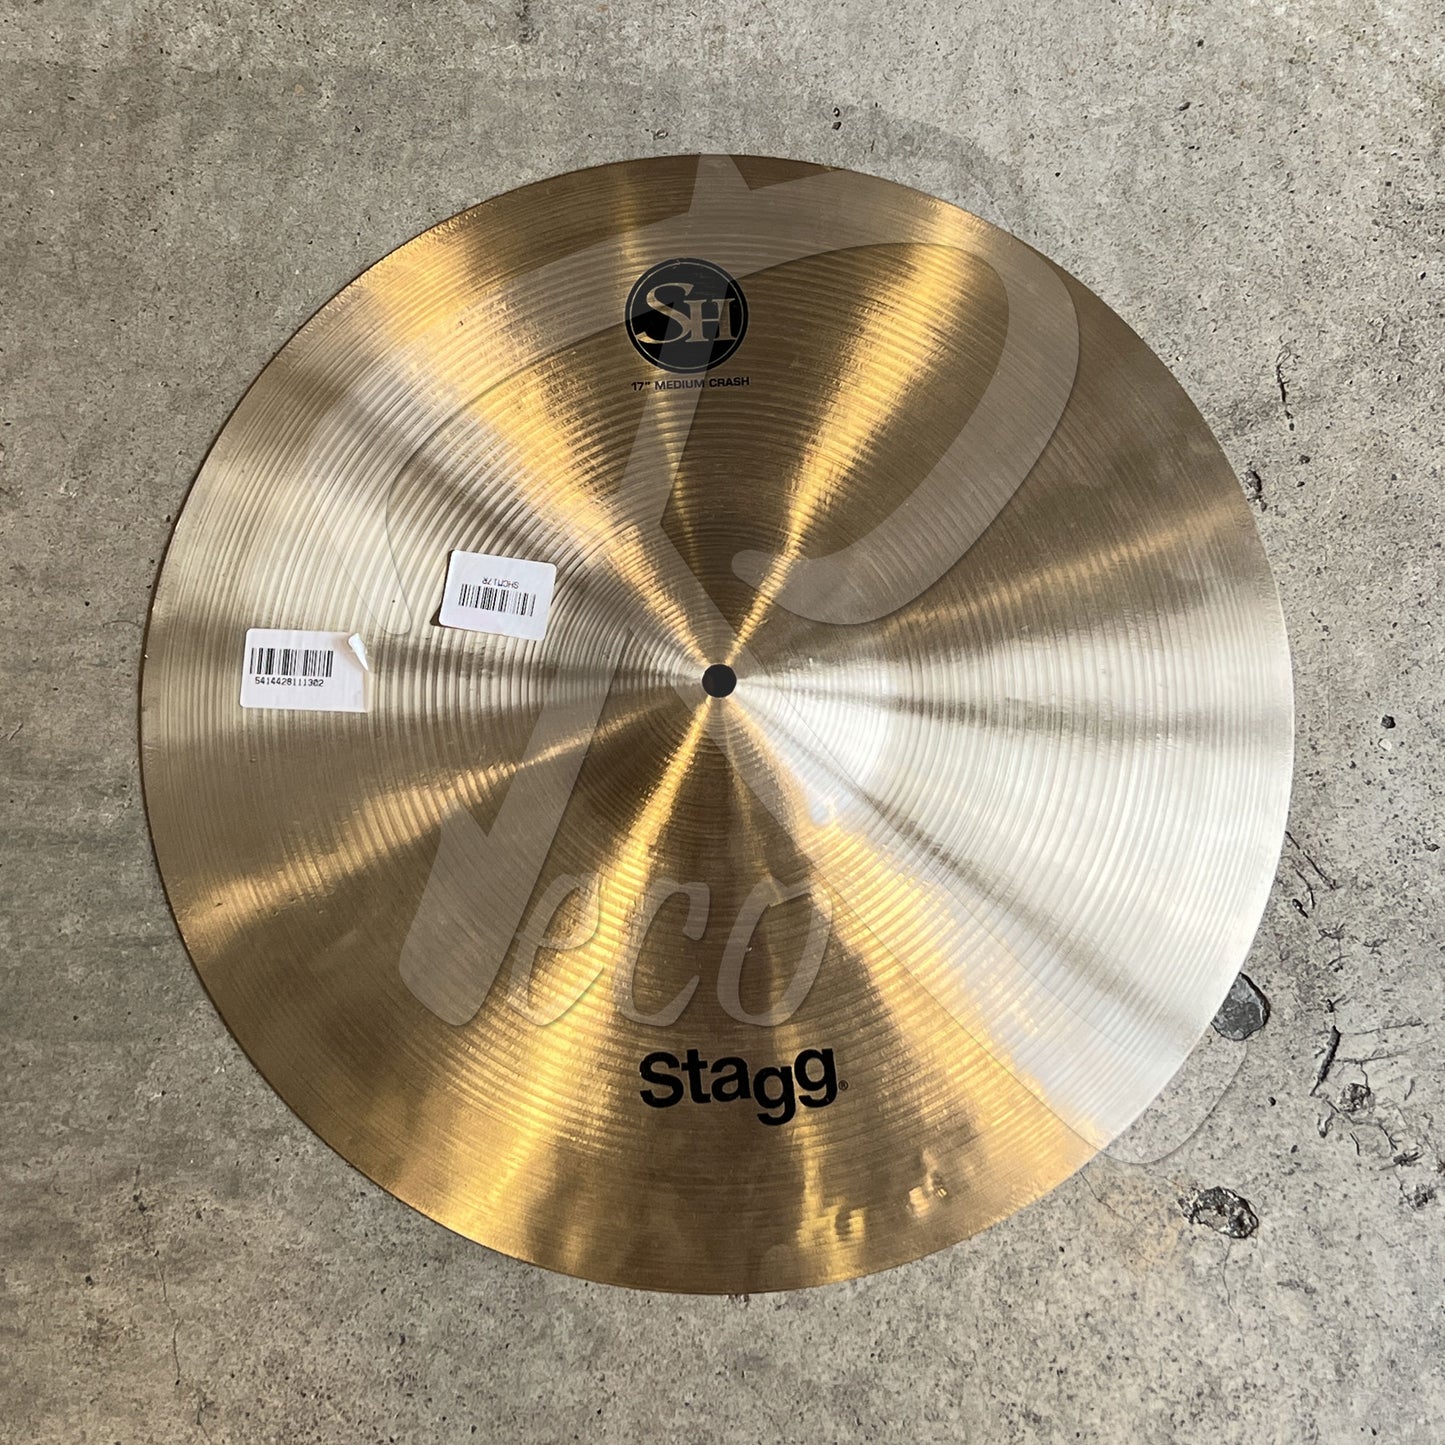 Stagg SH-CM17R 17 Inch SH Regular Medium Crash Cymbal (SHCM17R) - Reco Music Malaysia